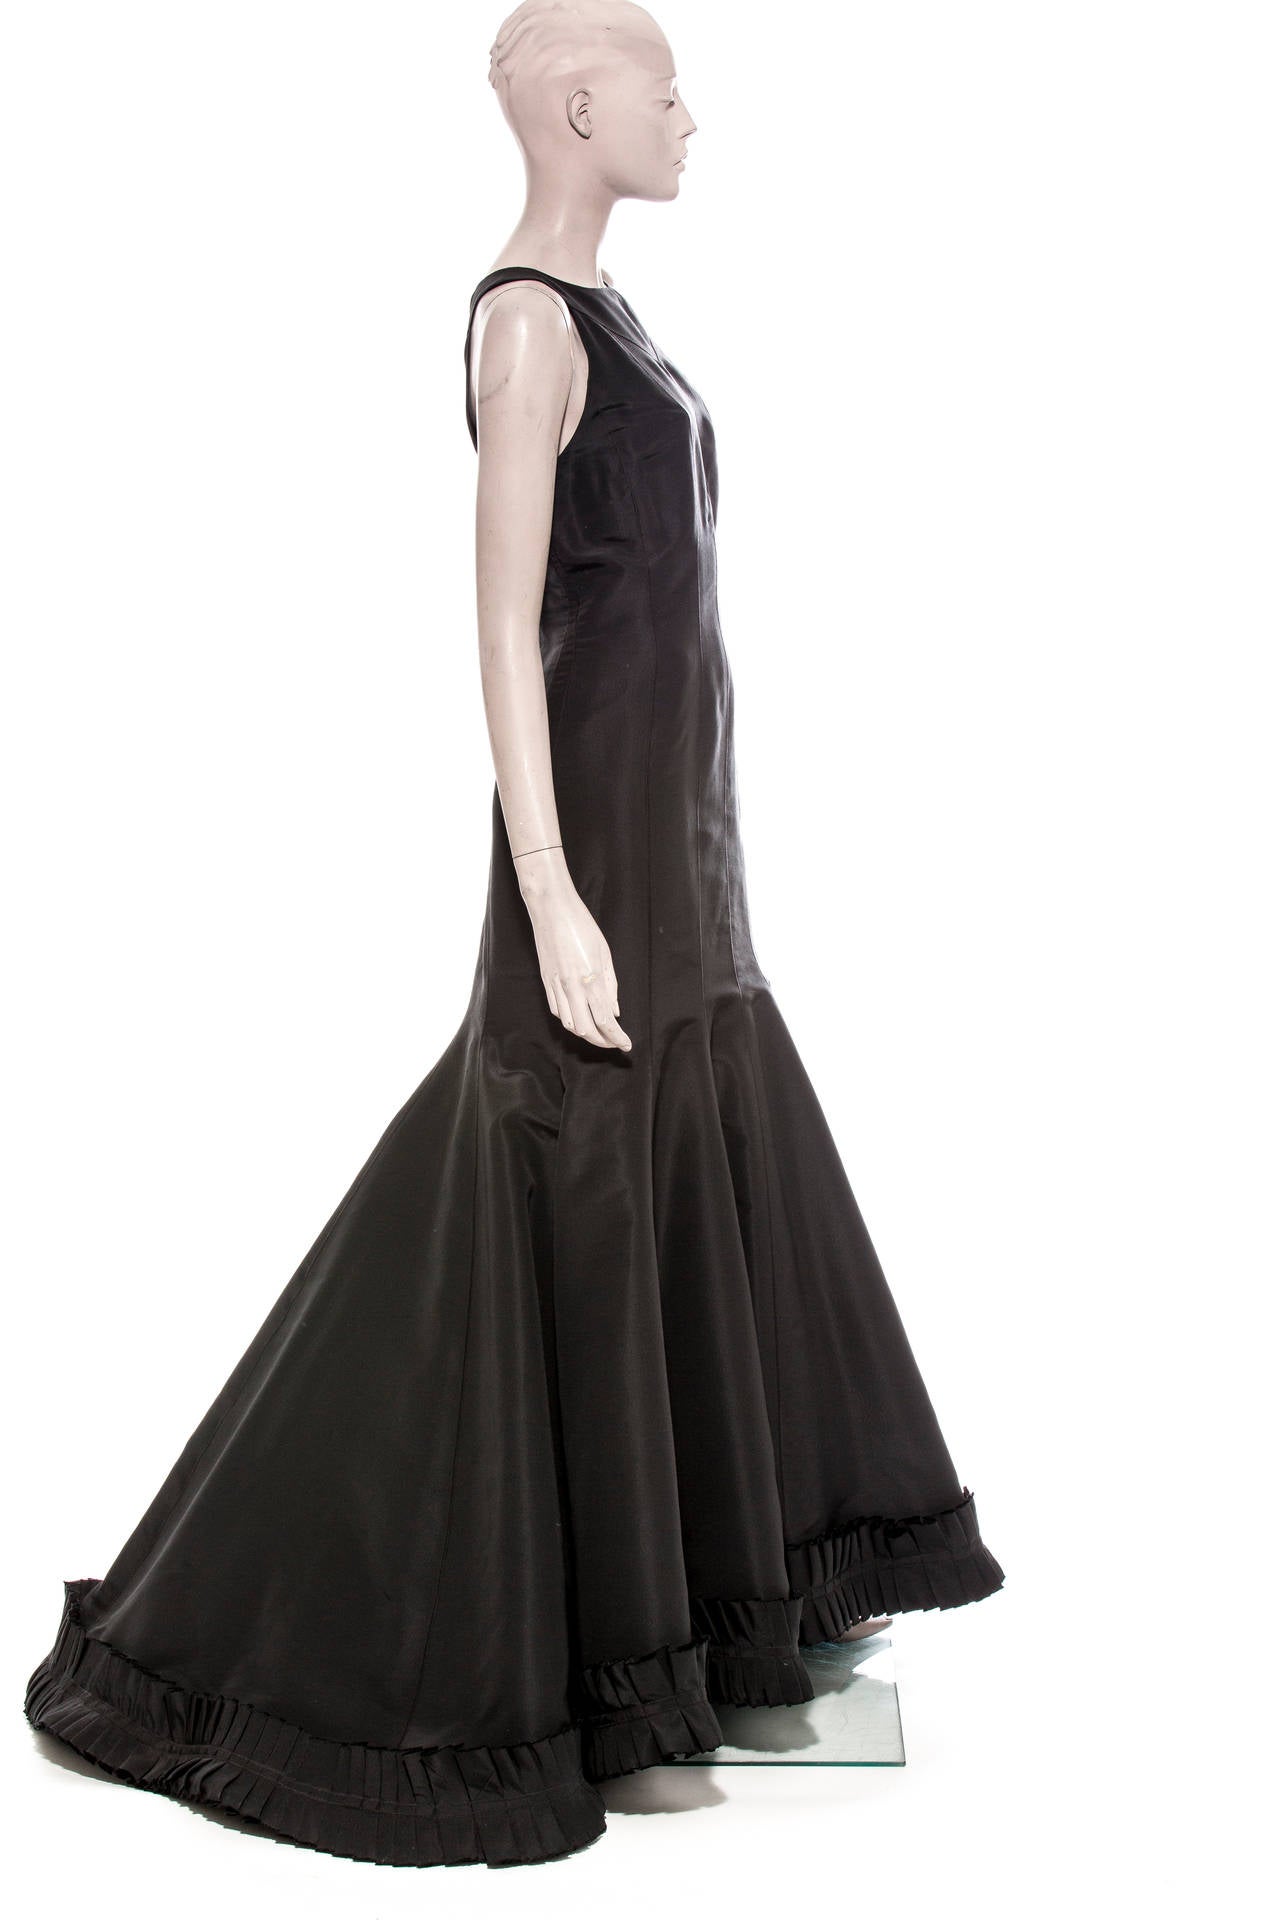 Women's Oscar de la Renta Sleeveless Black Silk Faille Evening Dress, Spring 2007